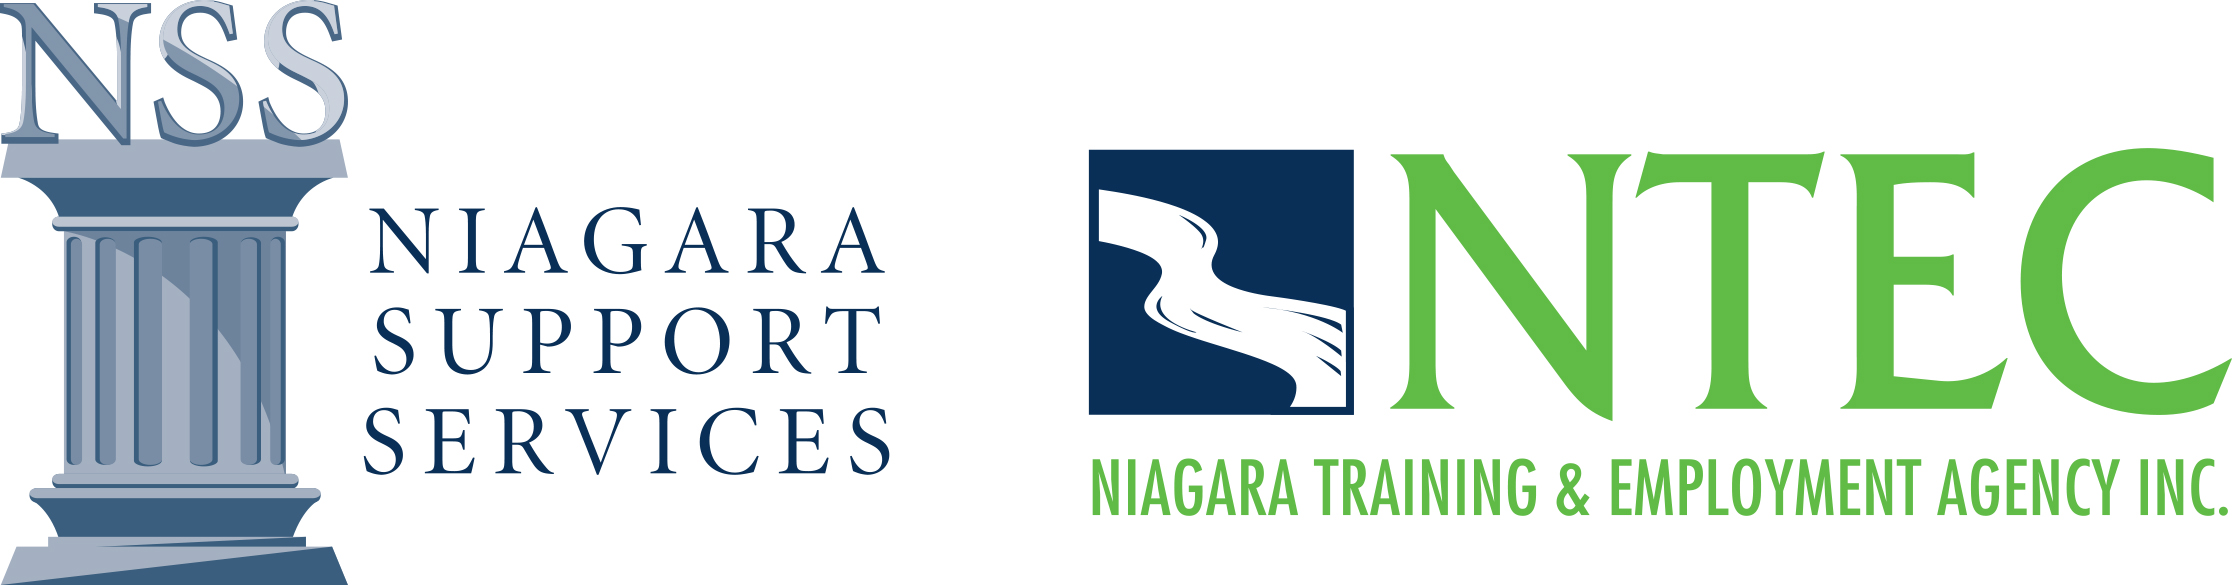 NSS - Niagara Support Services & NTEC - Niagara Training & Employment Agency Inc